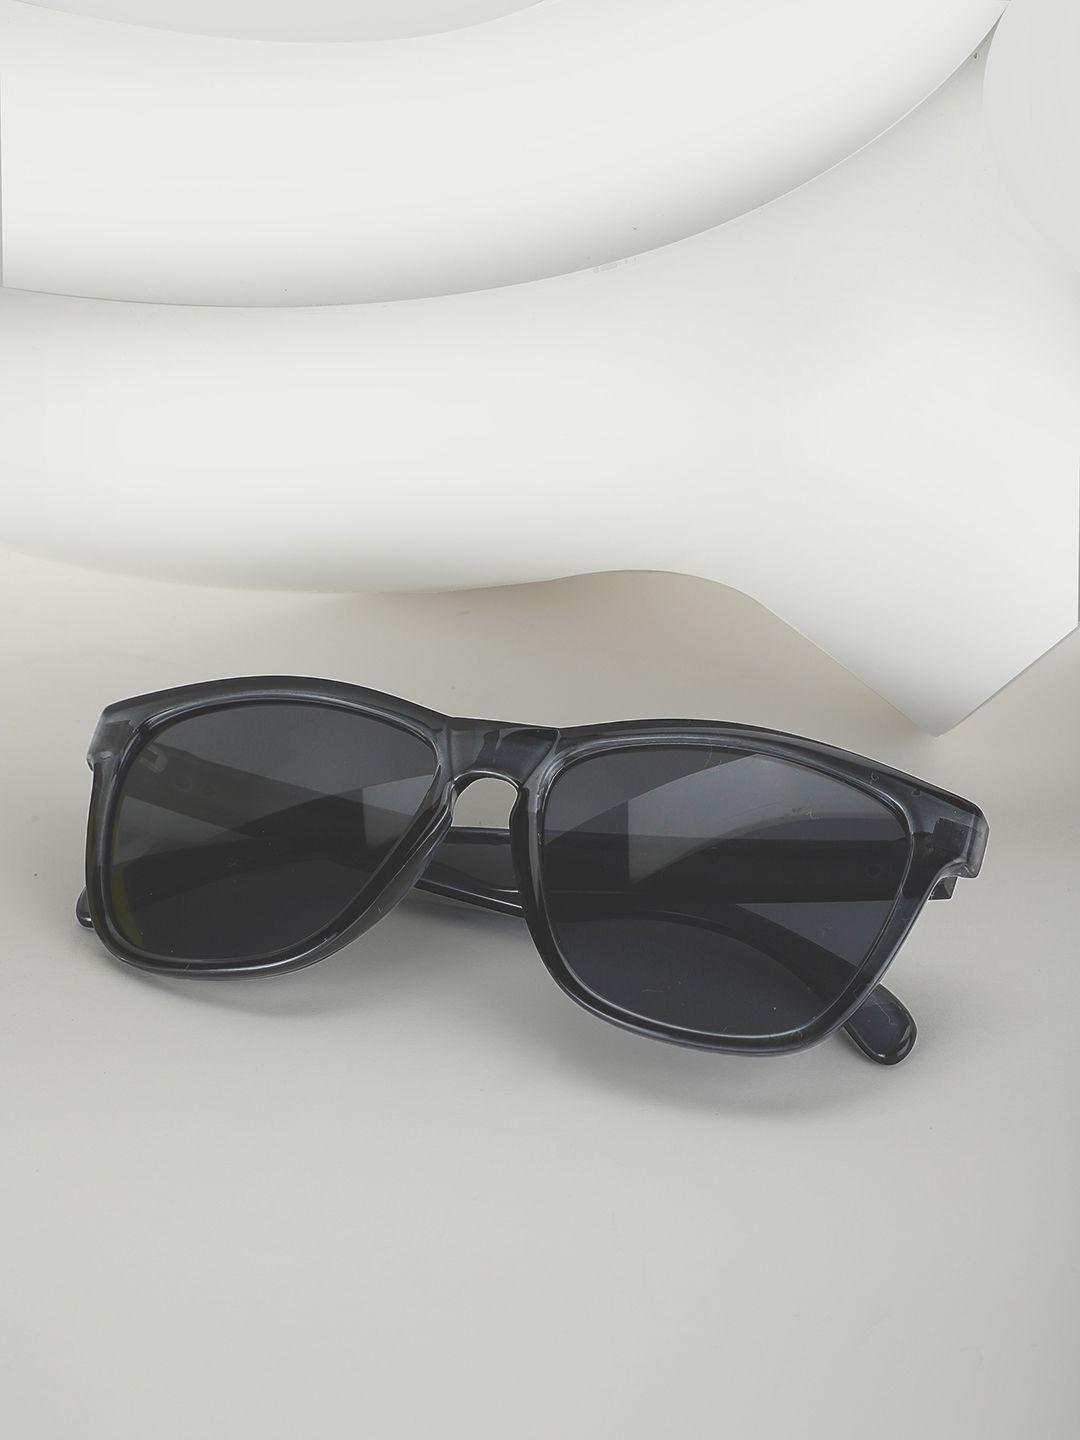 carlton london men black square sunglasses with uv protected lens 80152